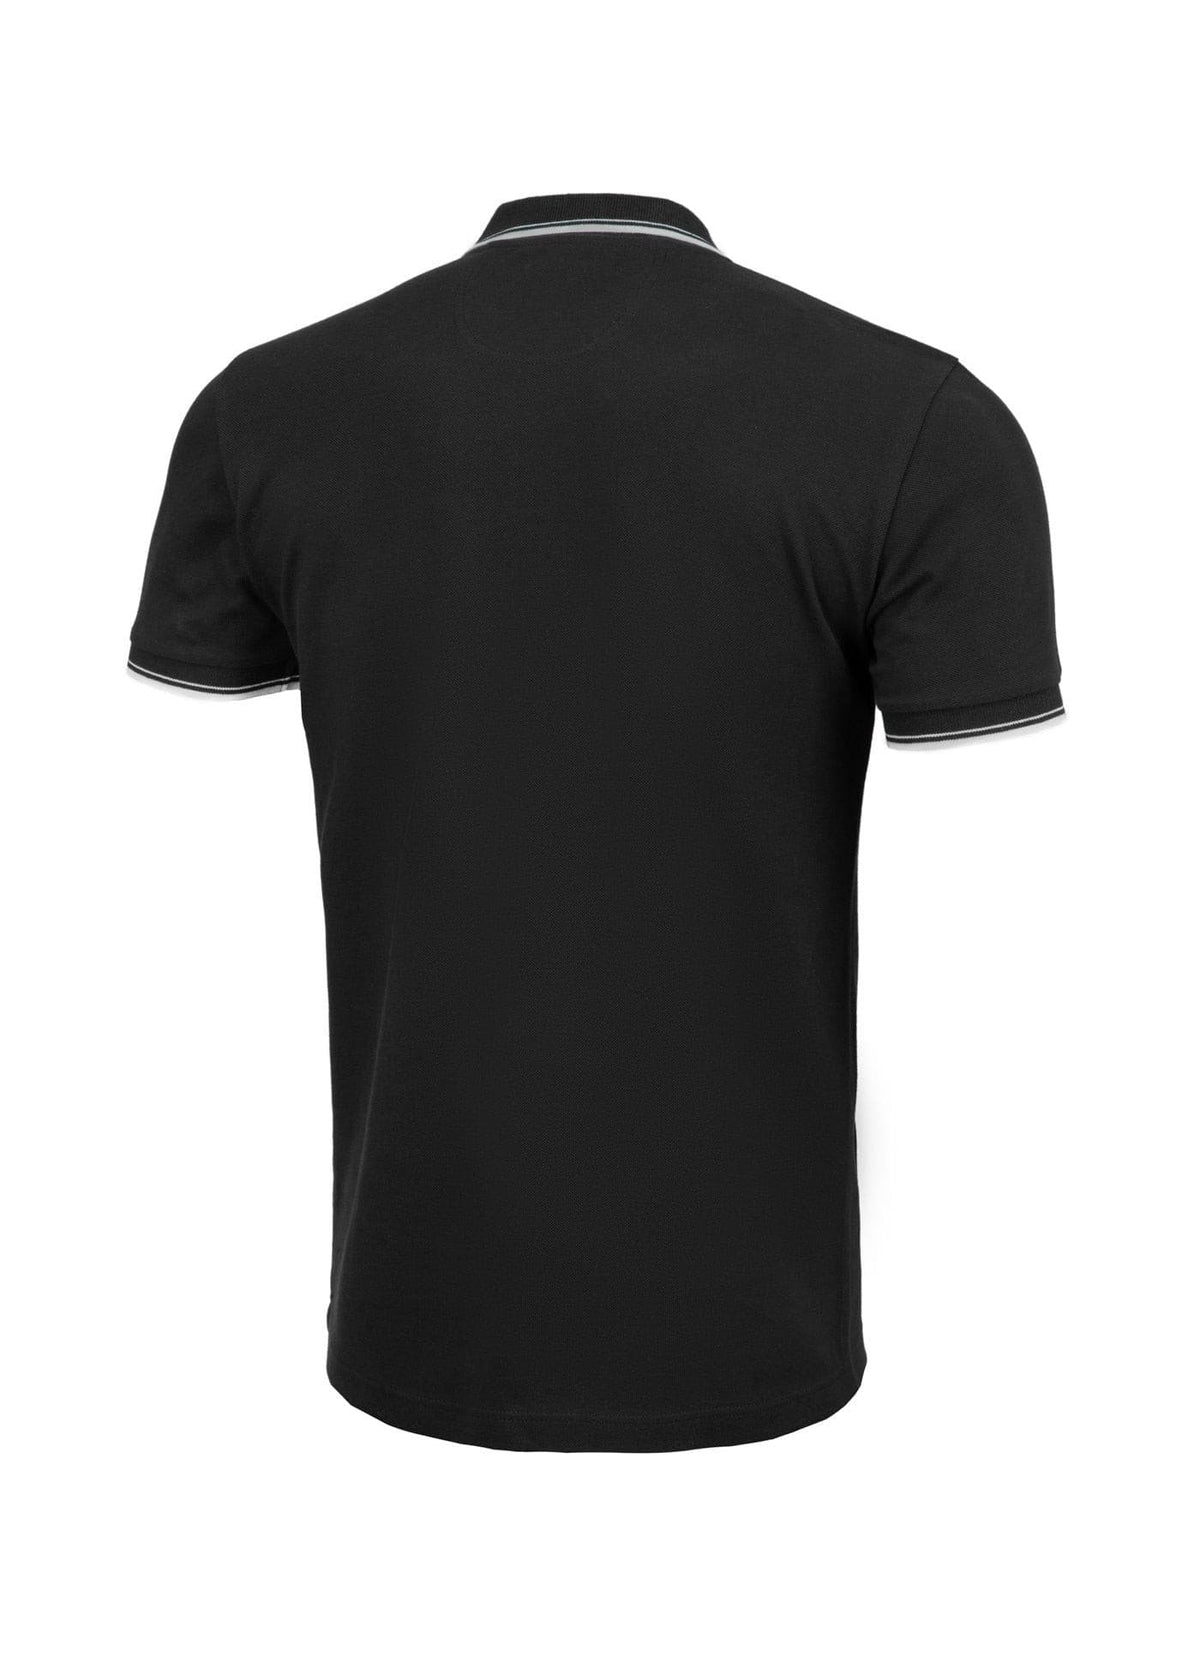 T-shirt POLO SLIM STRIPES Black - Pitbull West Coast U.S.A. 